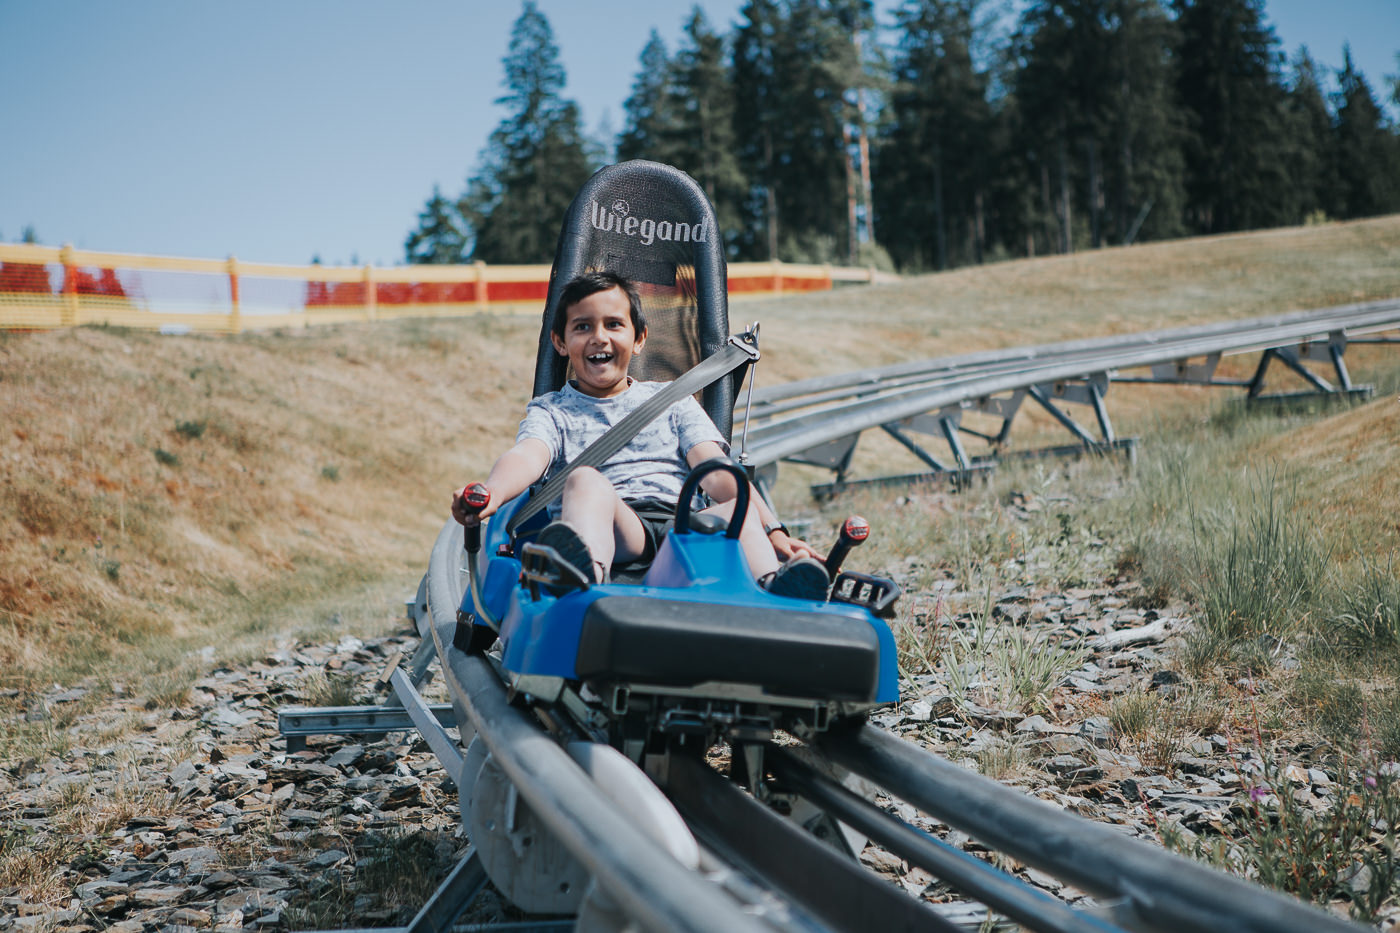 kid on summer sled - high speed fun